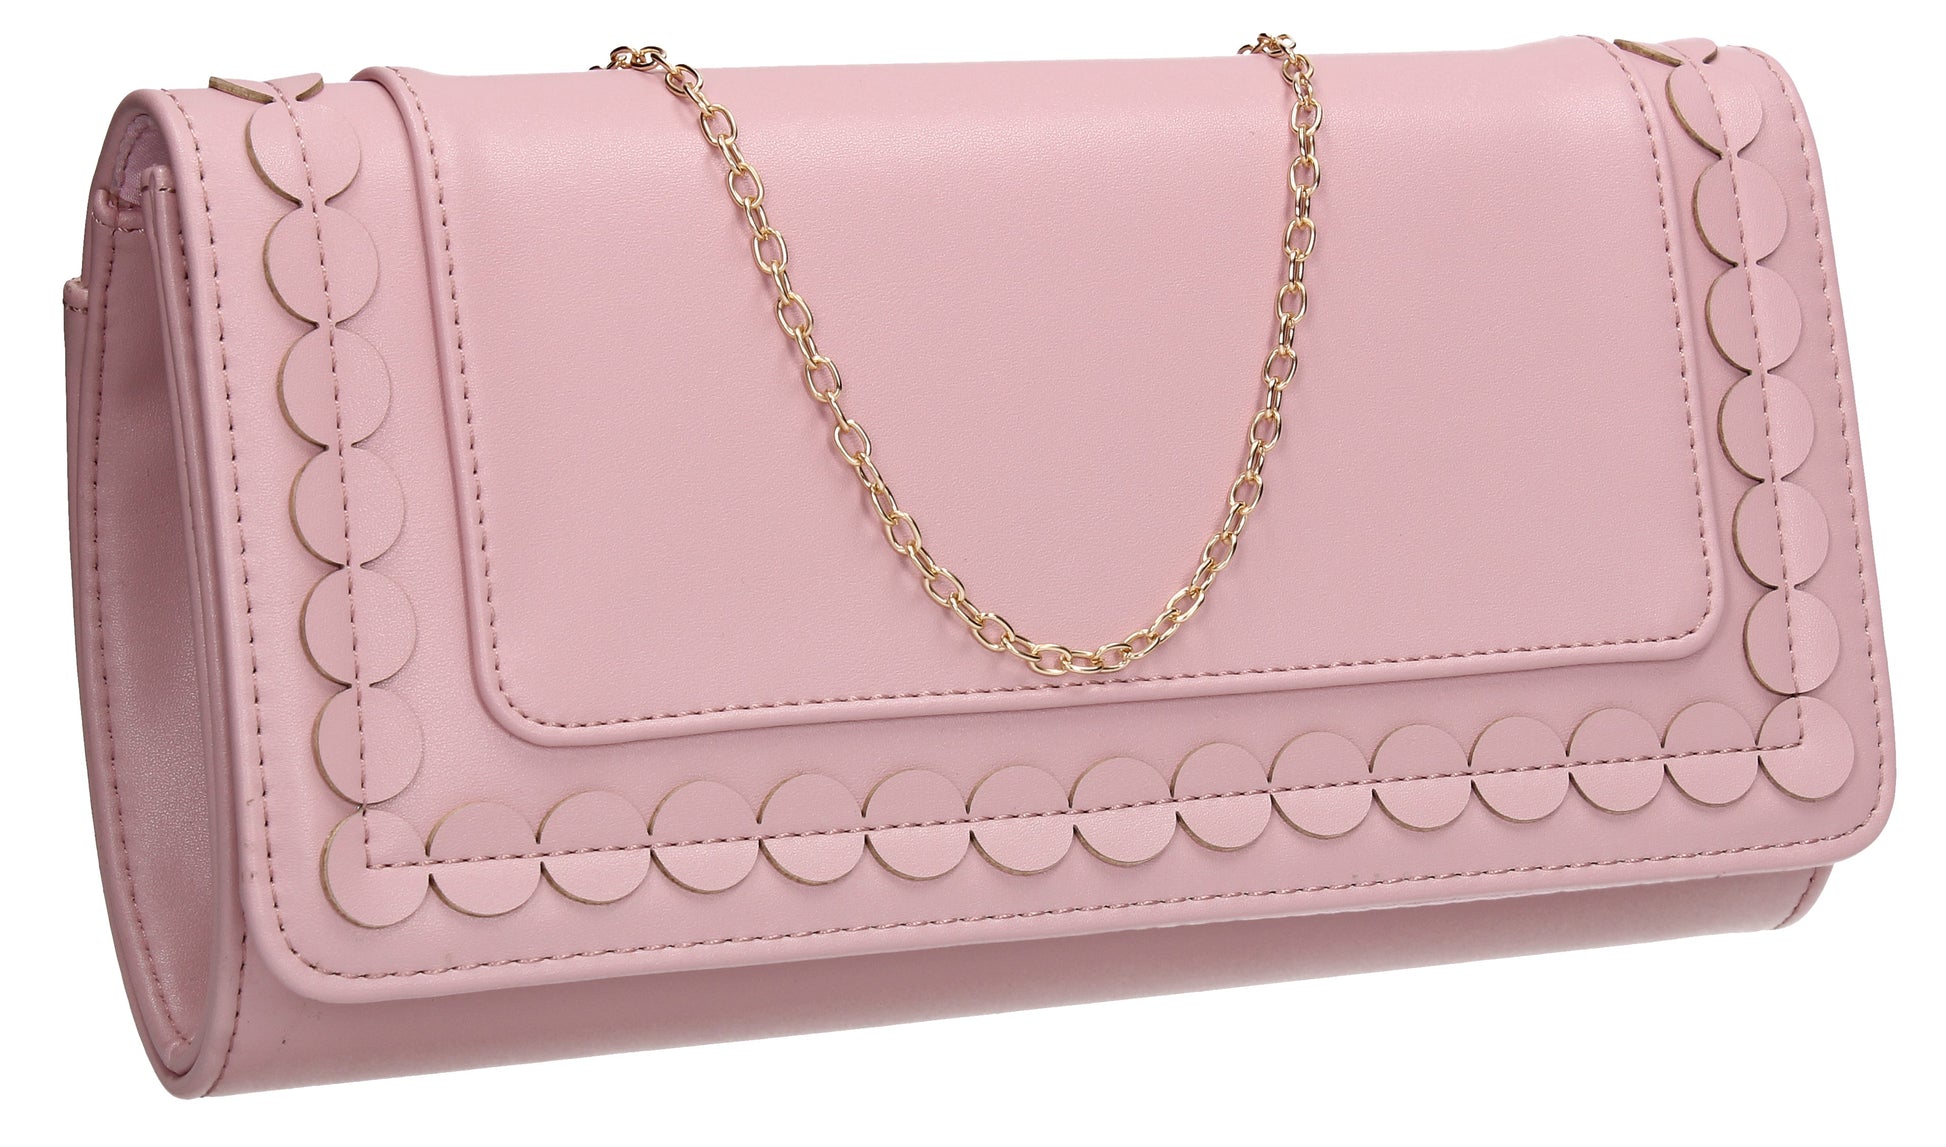 SWANKYSWANS Macy Clutch Bag Pink Cute Cheap Clutch Bag For Weddings School and Work